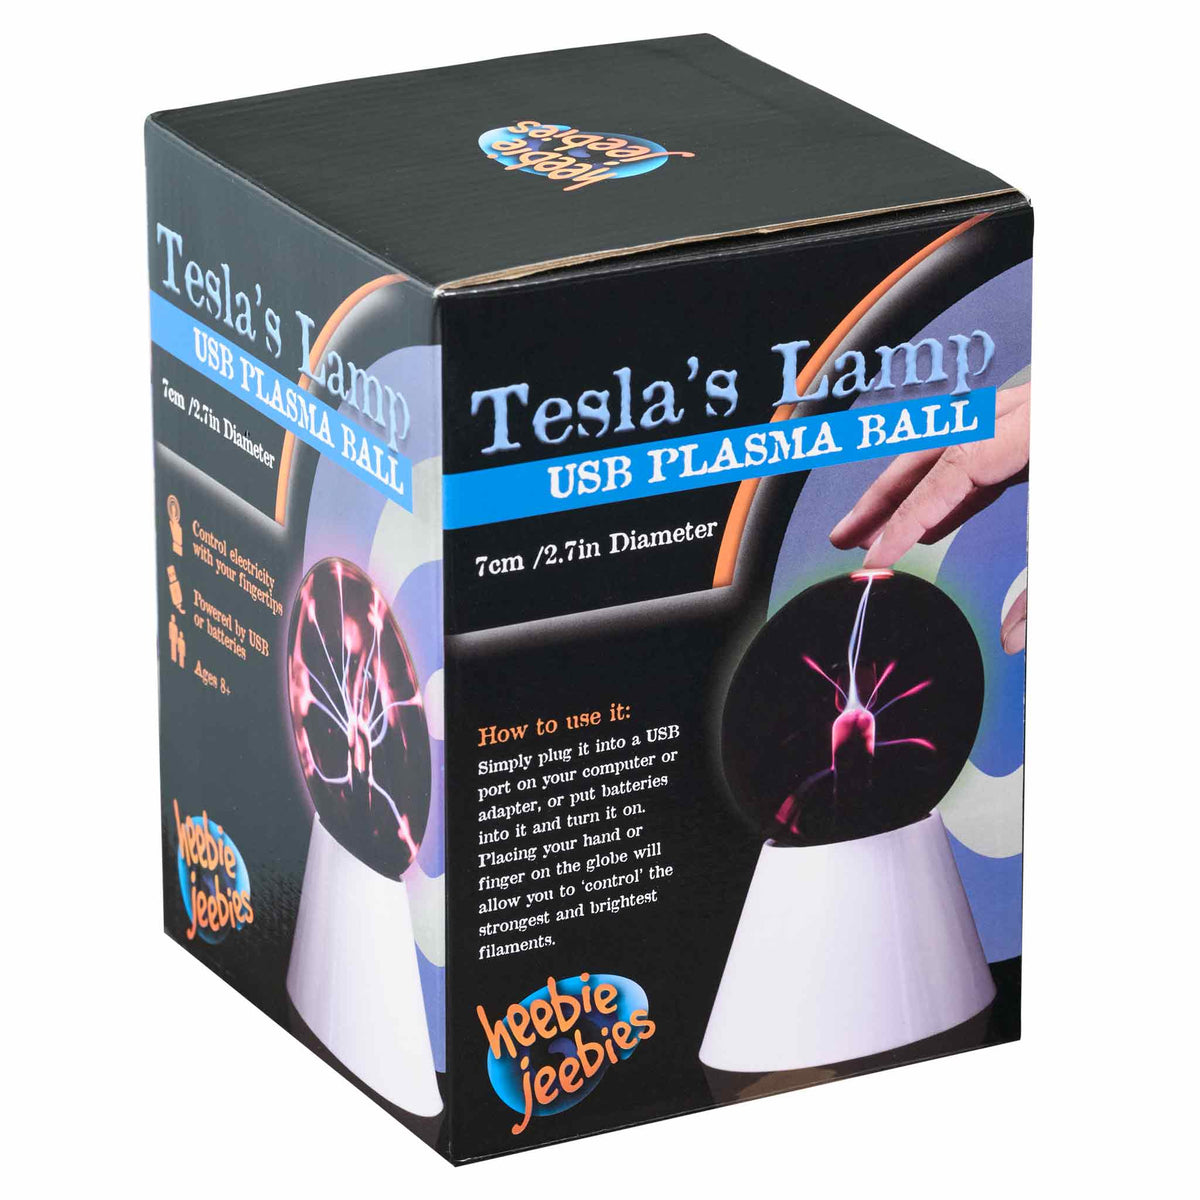 Tesla's Lamp USB Plasma Ball Cover